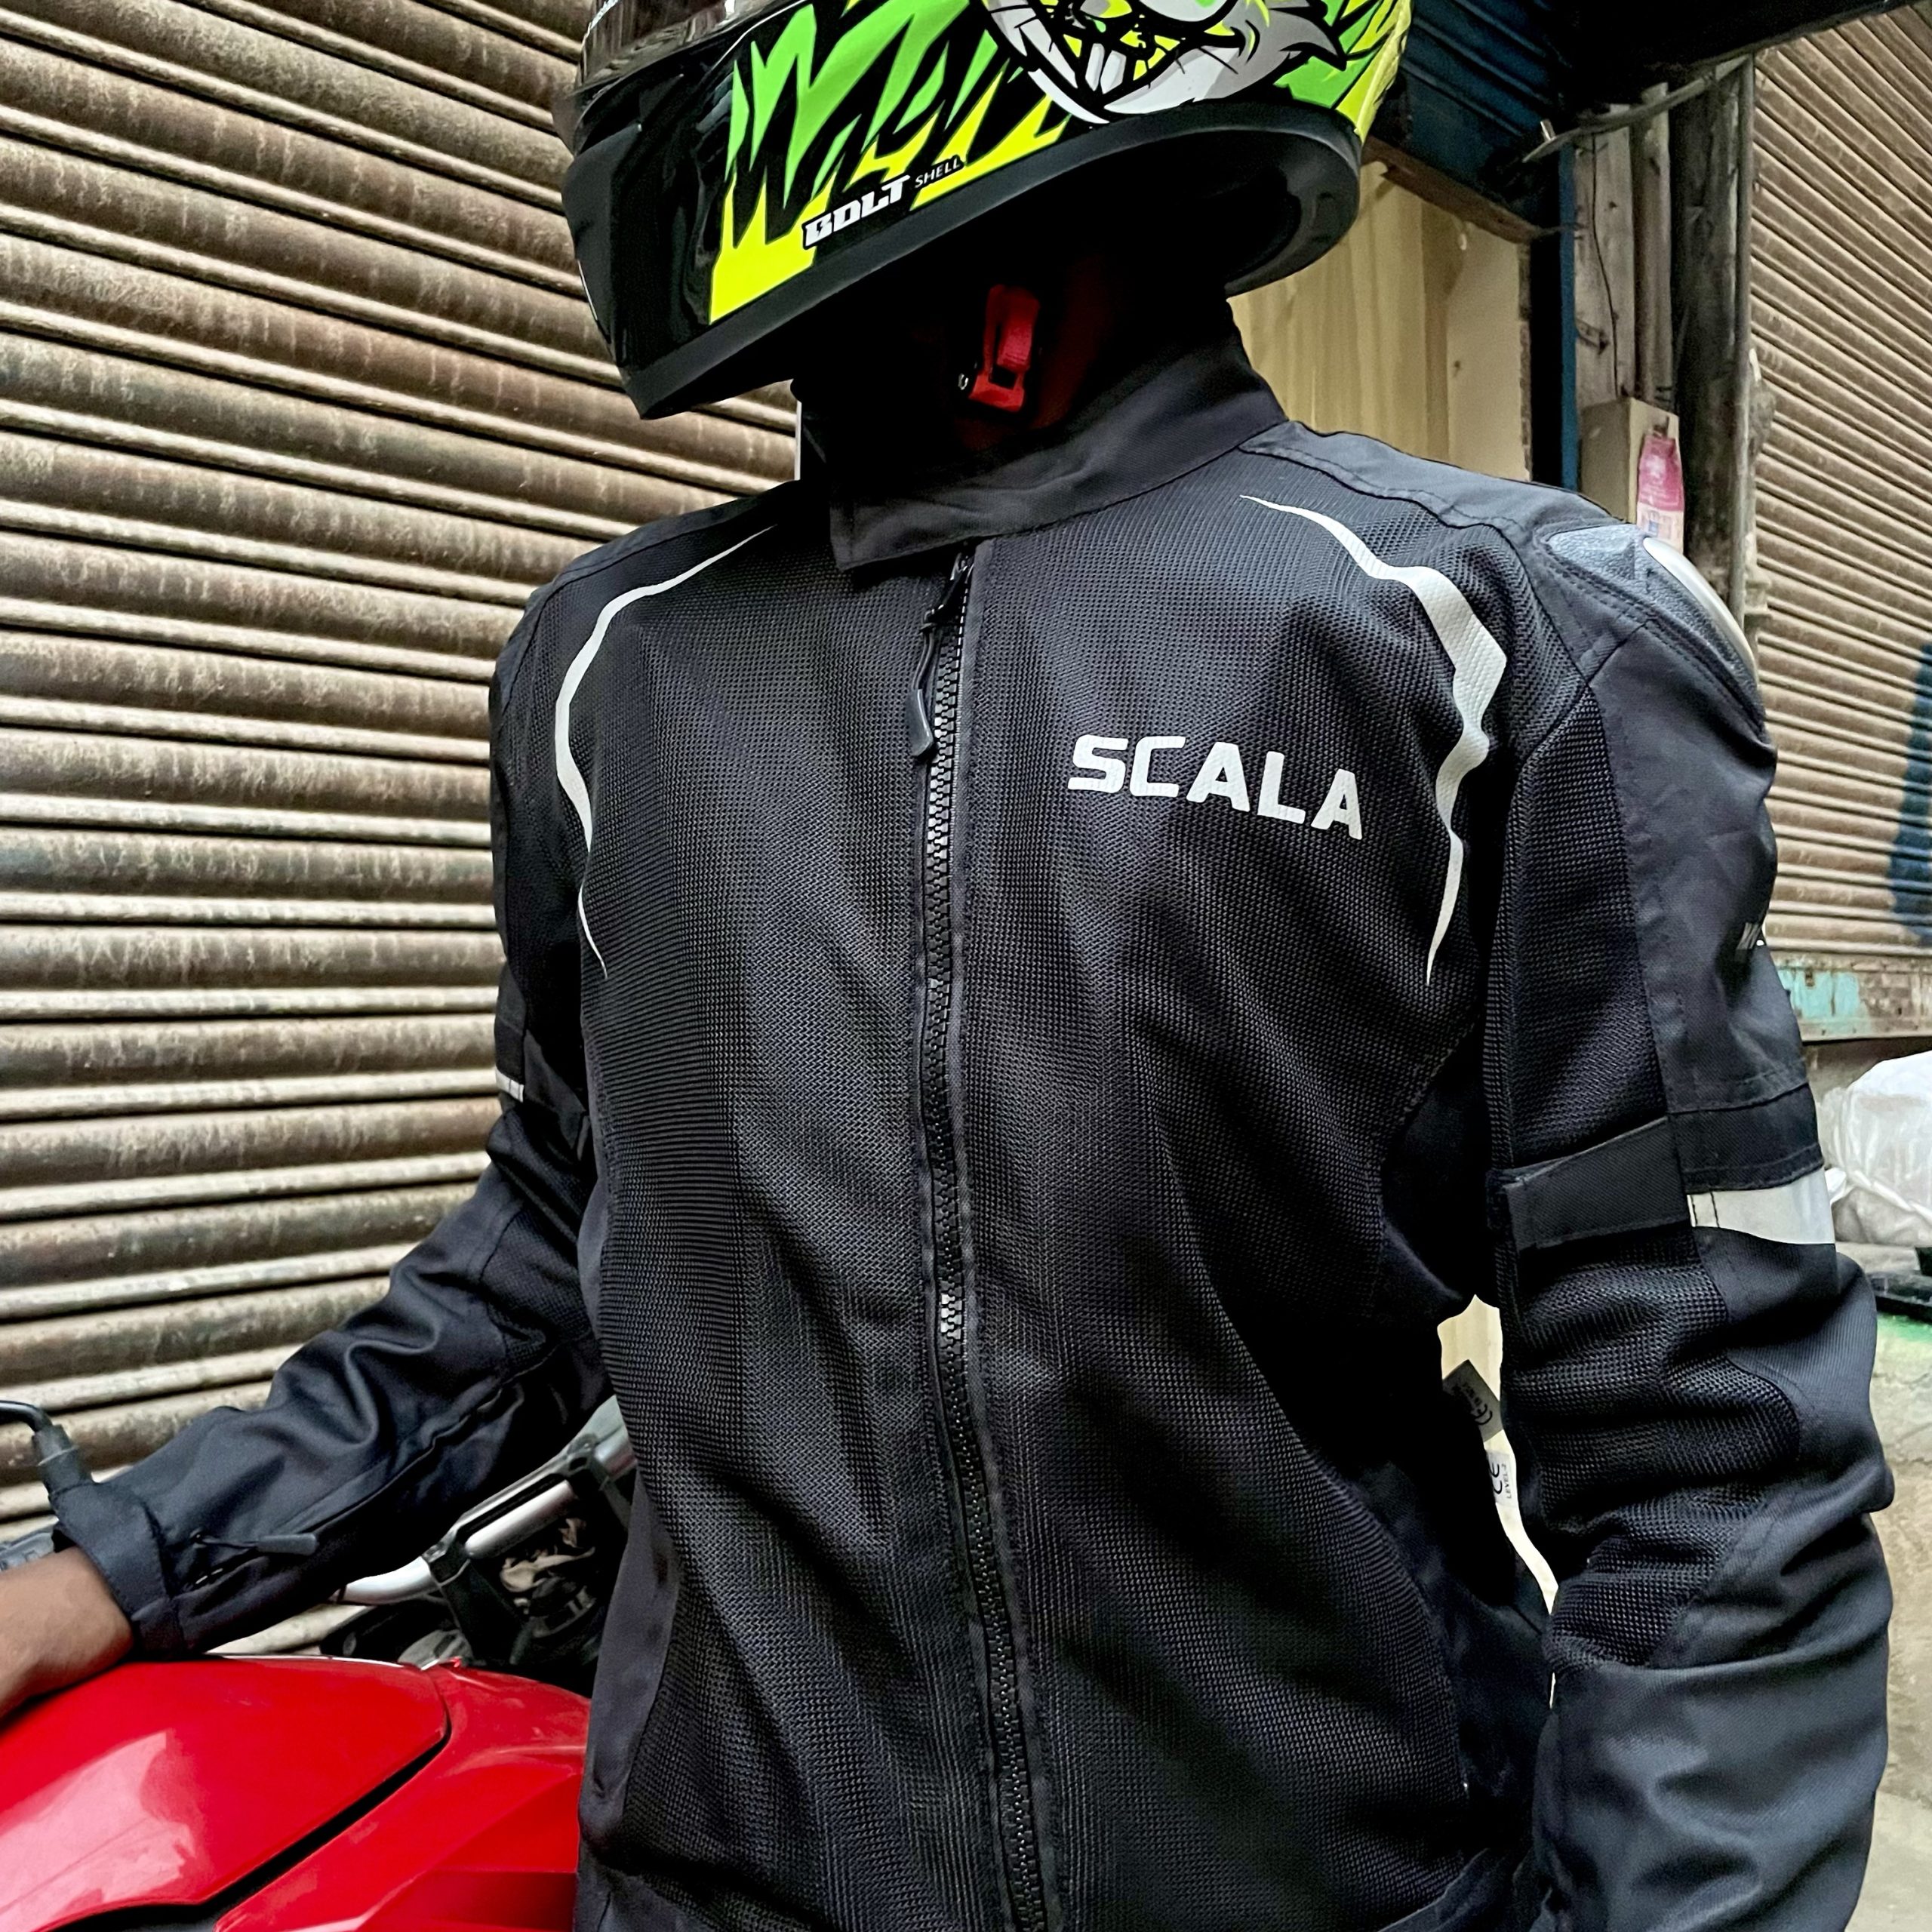 SCALA GEARS BDJ4 Riding Protective Jacket Price in India - Buy SCALA GEARS  BDJ4 Riding Protective Jacket online at Flipkart.com